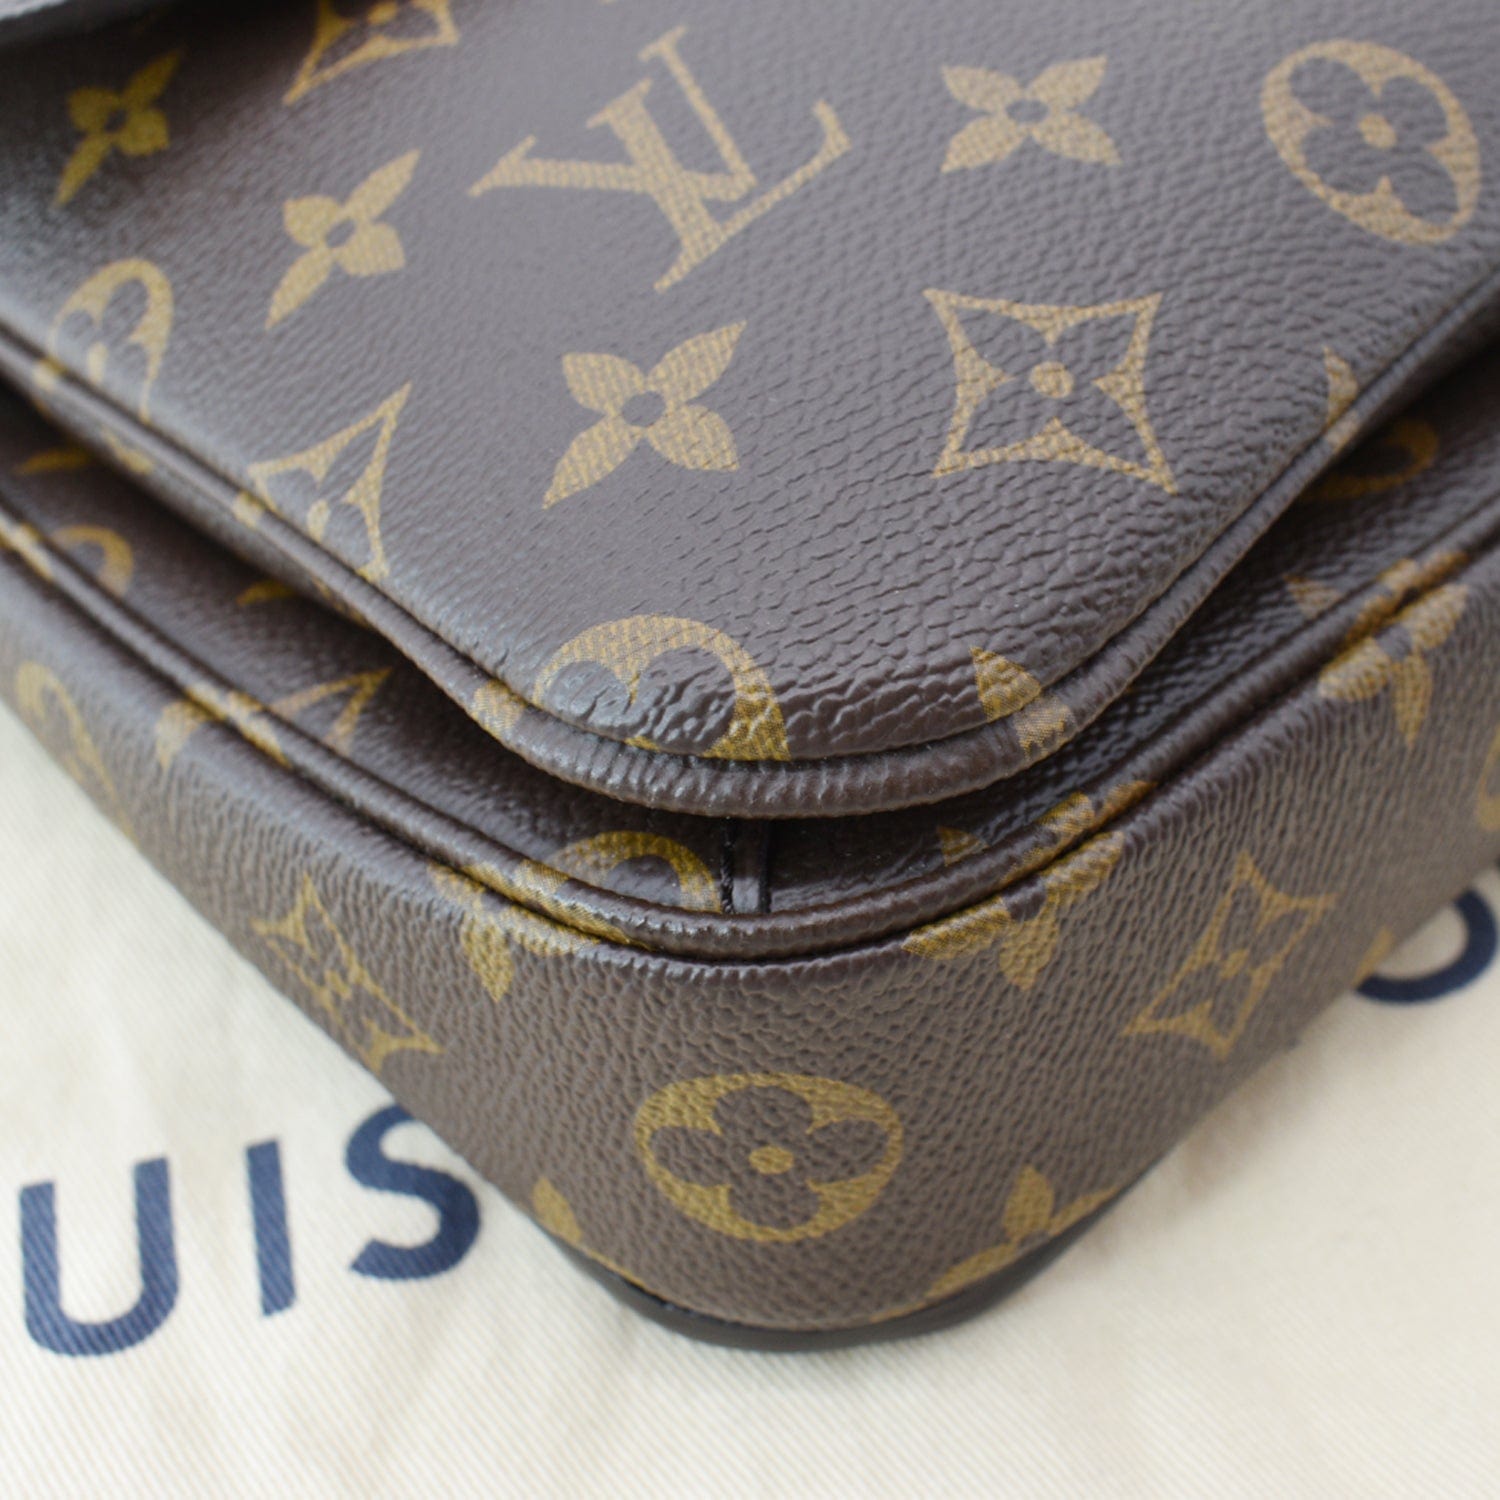 Metis cloth handbag Louis Vuitton Brown in Cloth - 31243124